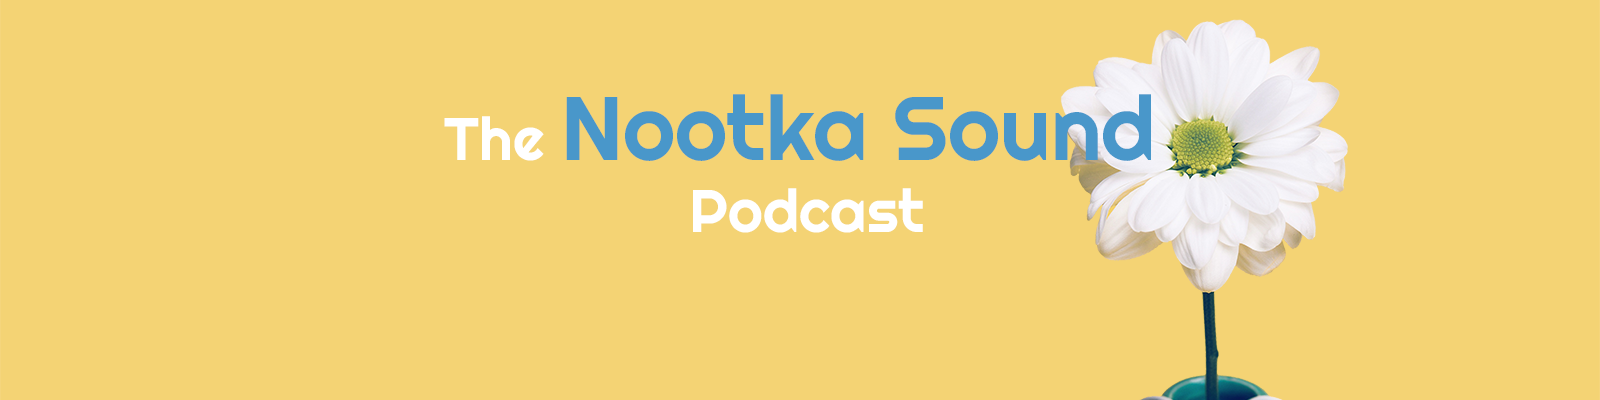 The Nootka Sound Podcast // A Podcast About Podcasting